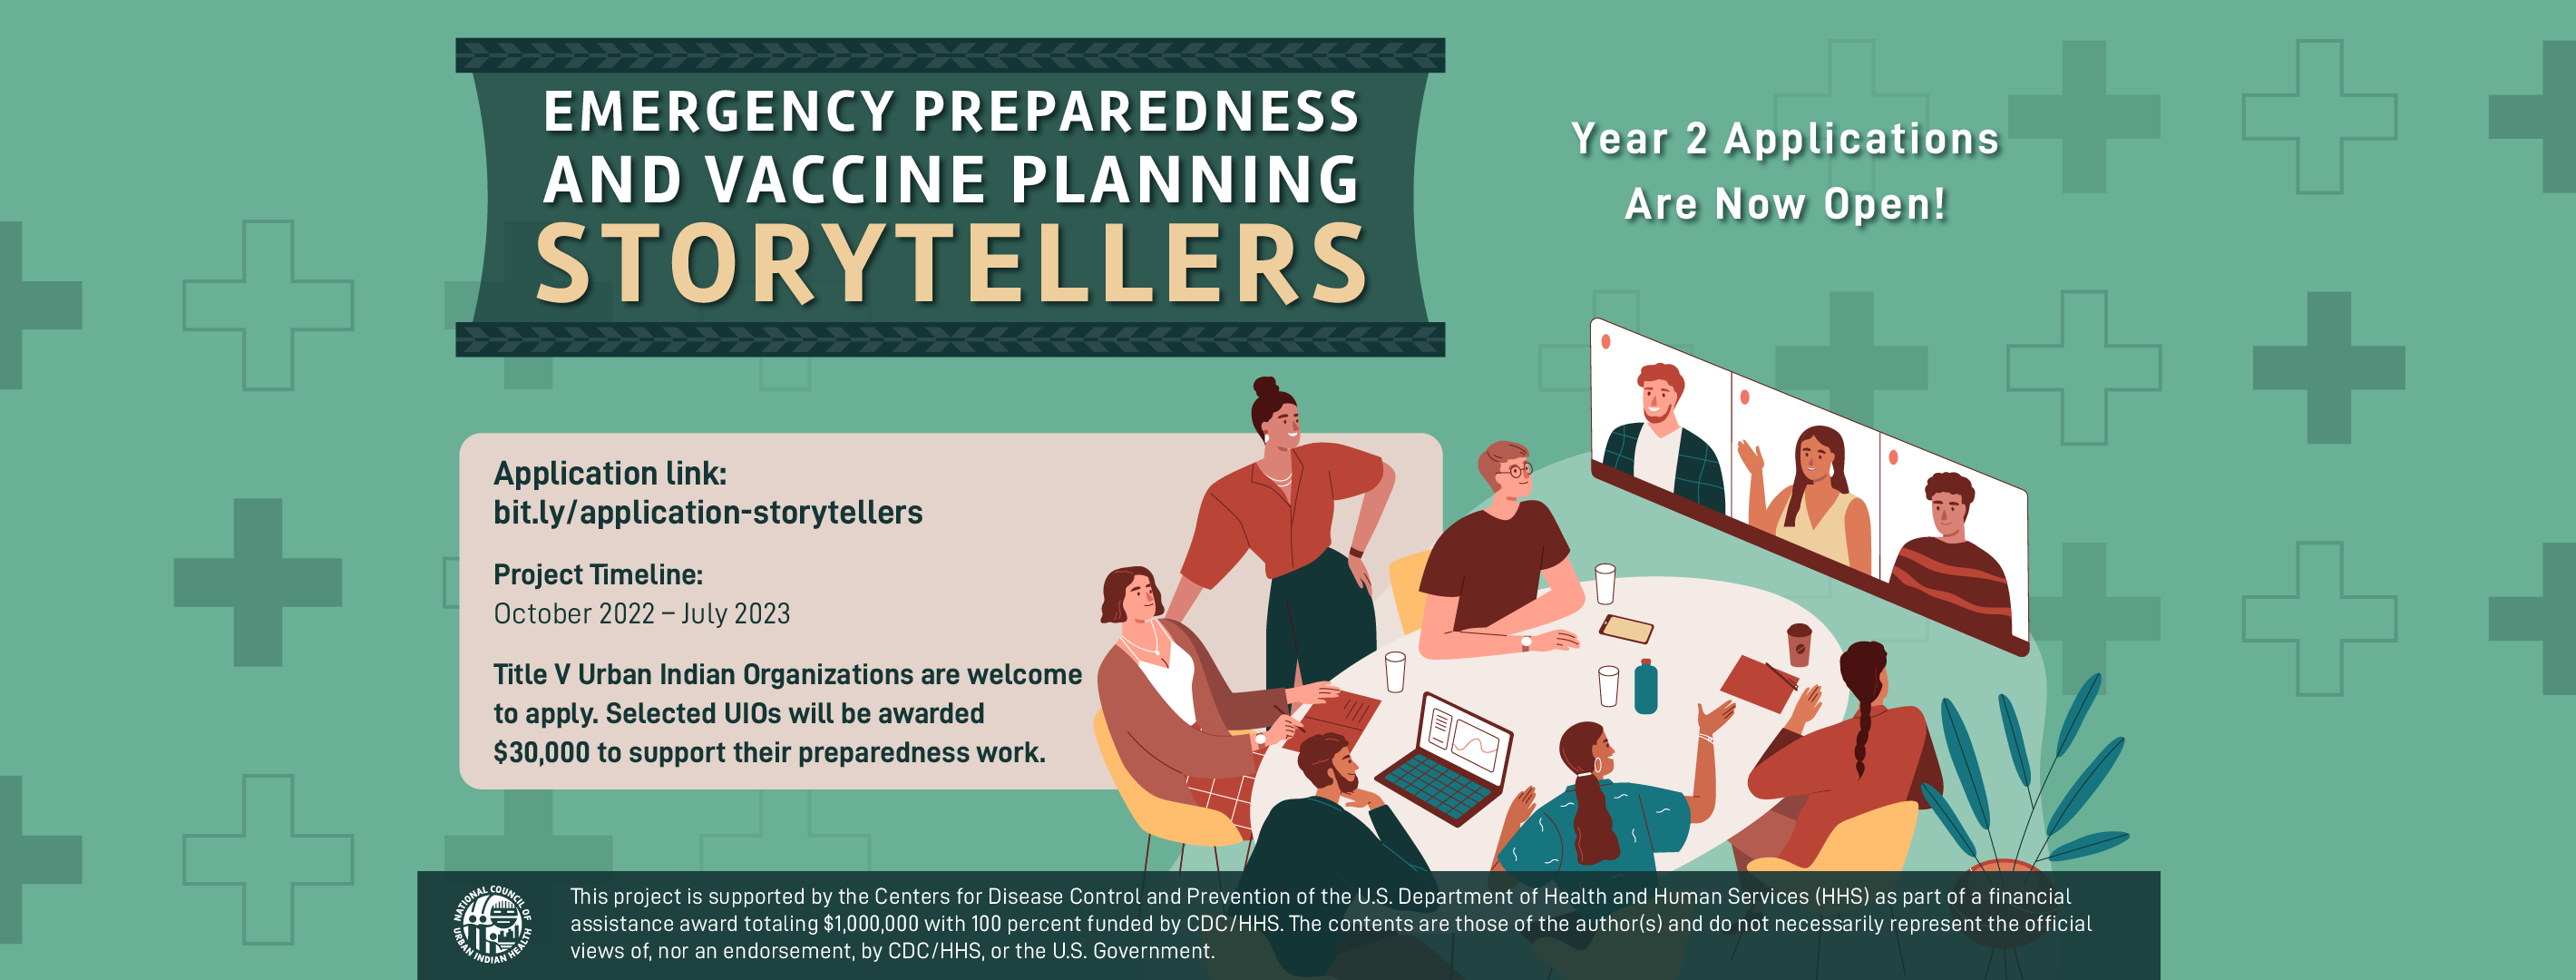 Emergency Preparedness and Vaccine Planning Storytellers